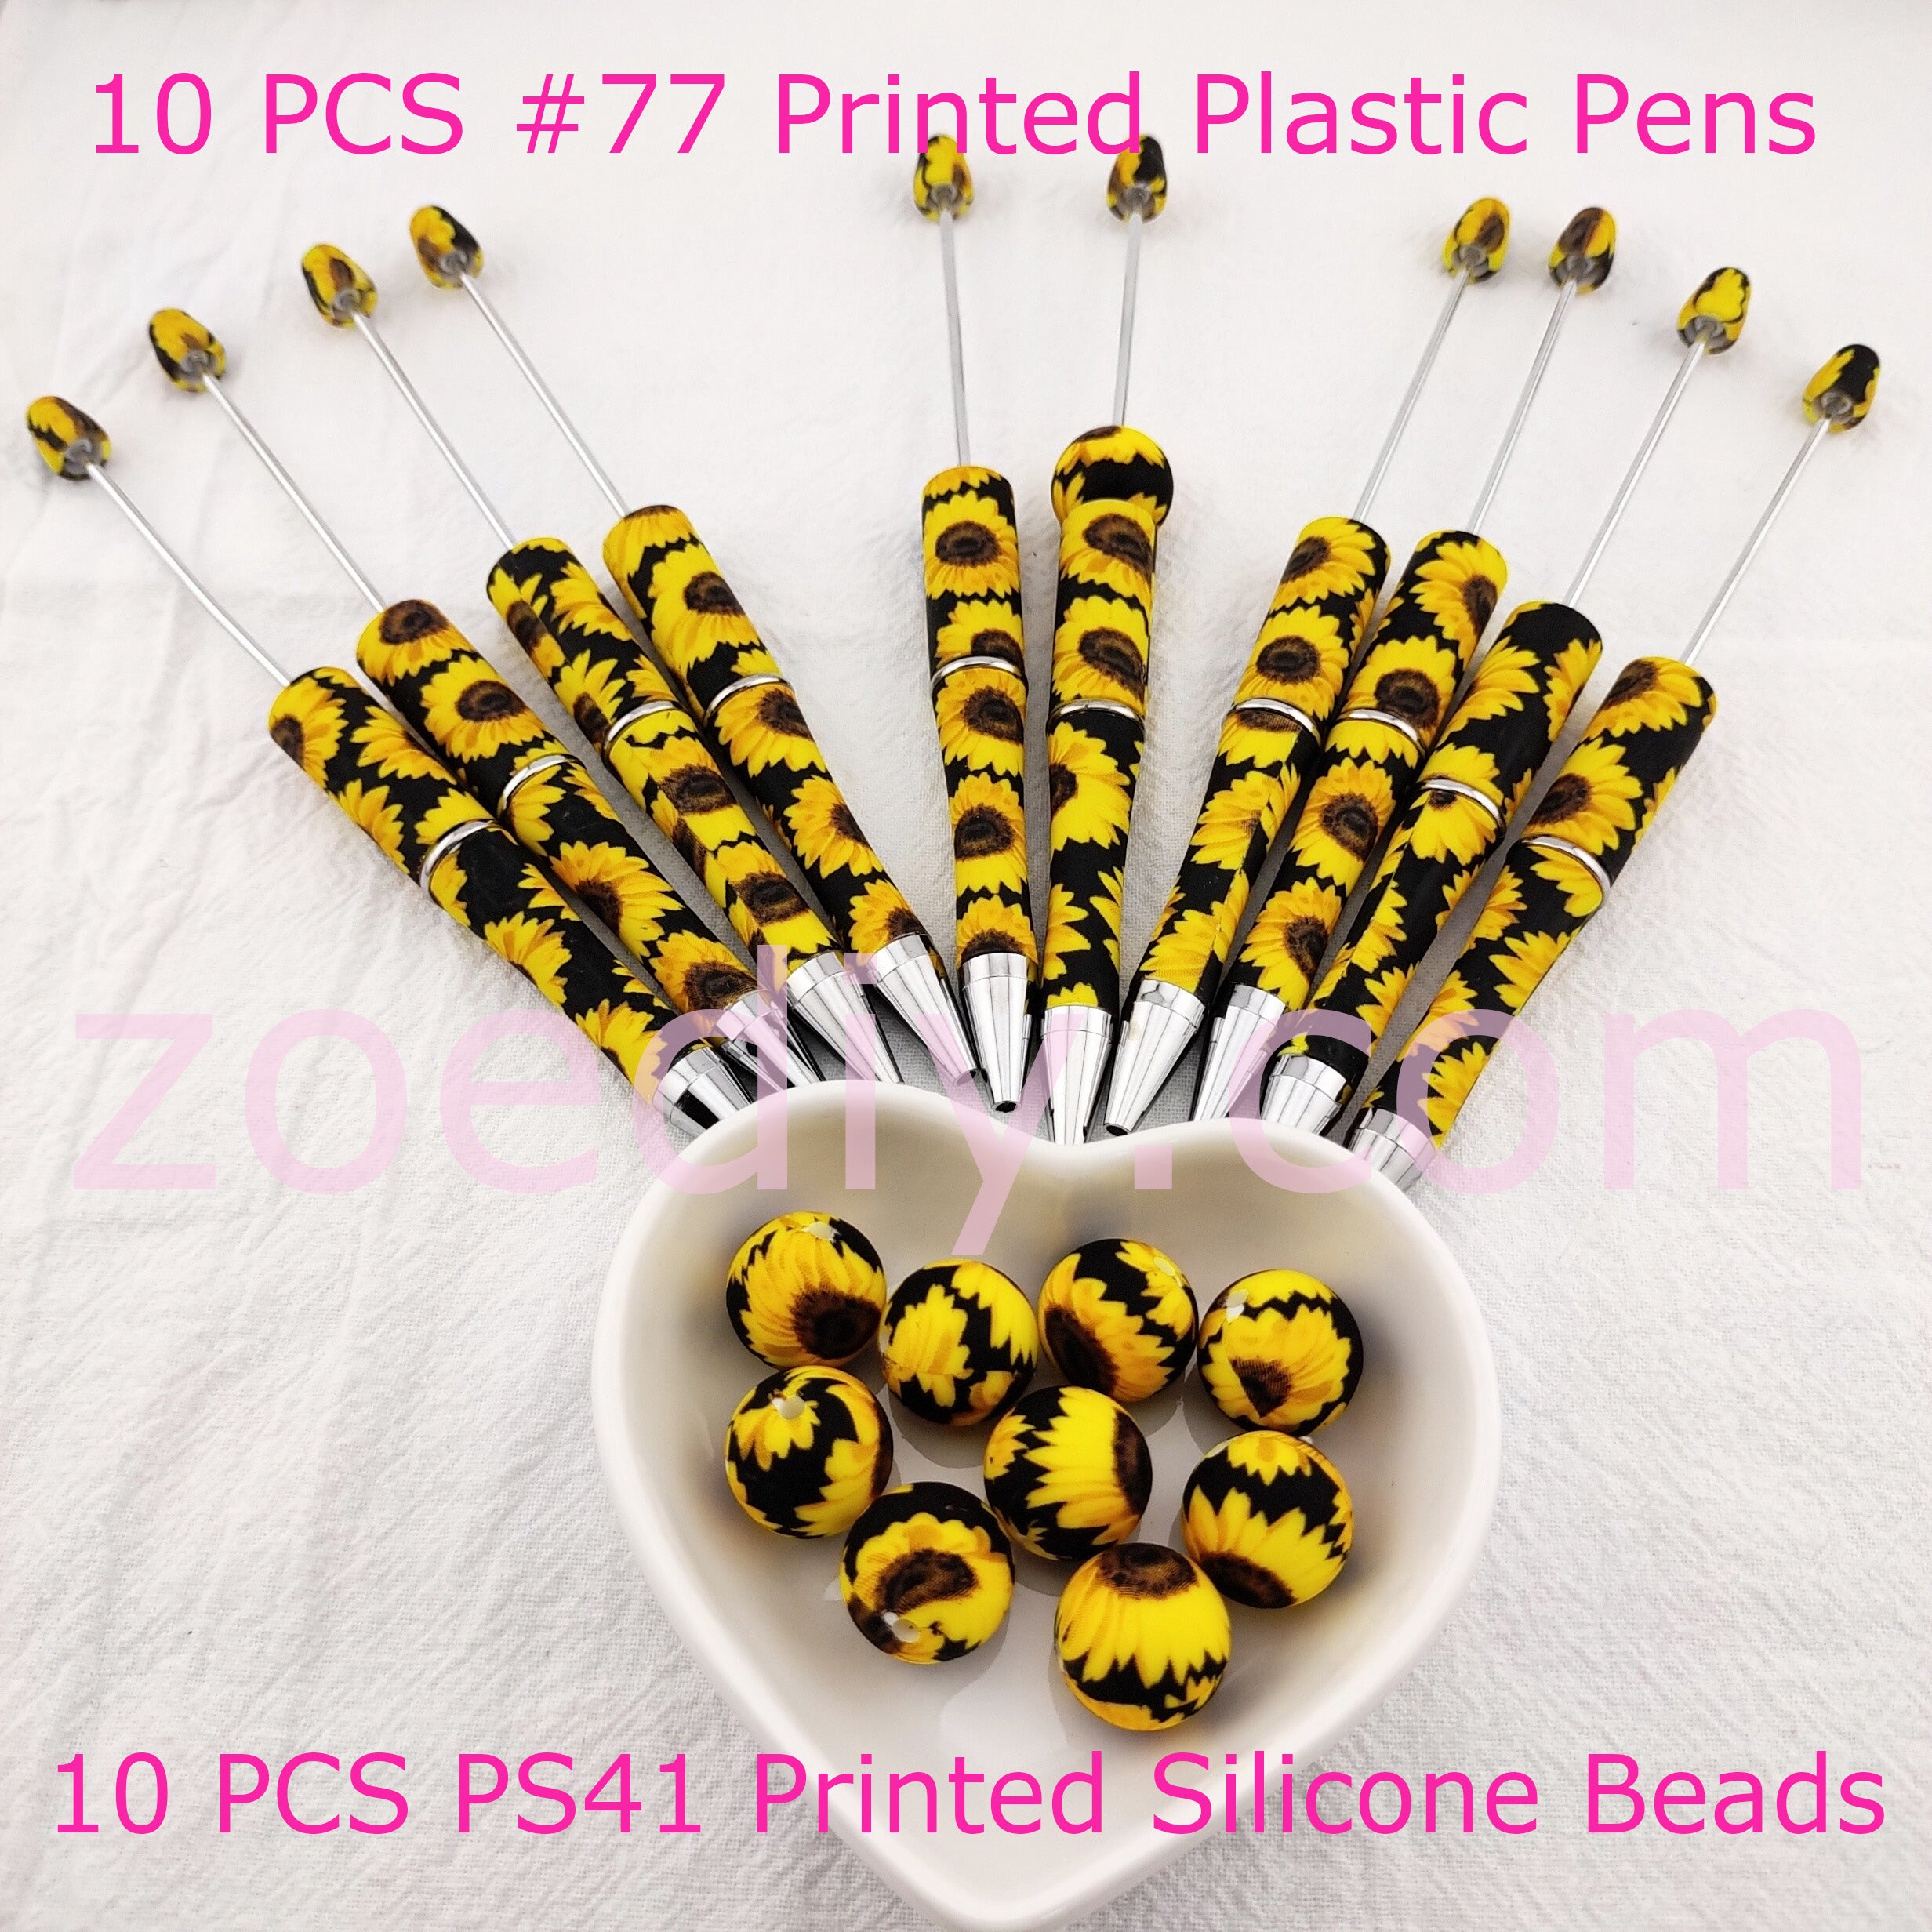 10 PCS Sunflower #77 Printed Plastic Pens + 10 PCS PS41 Printed Silicone Beads SET